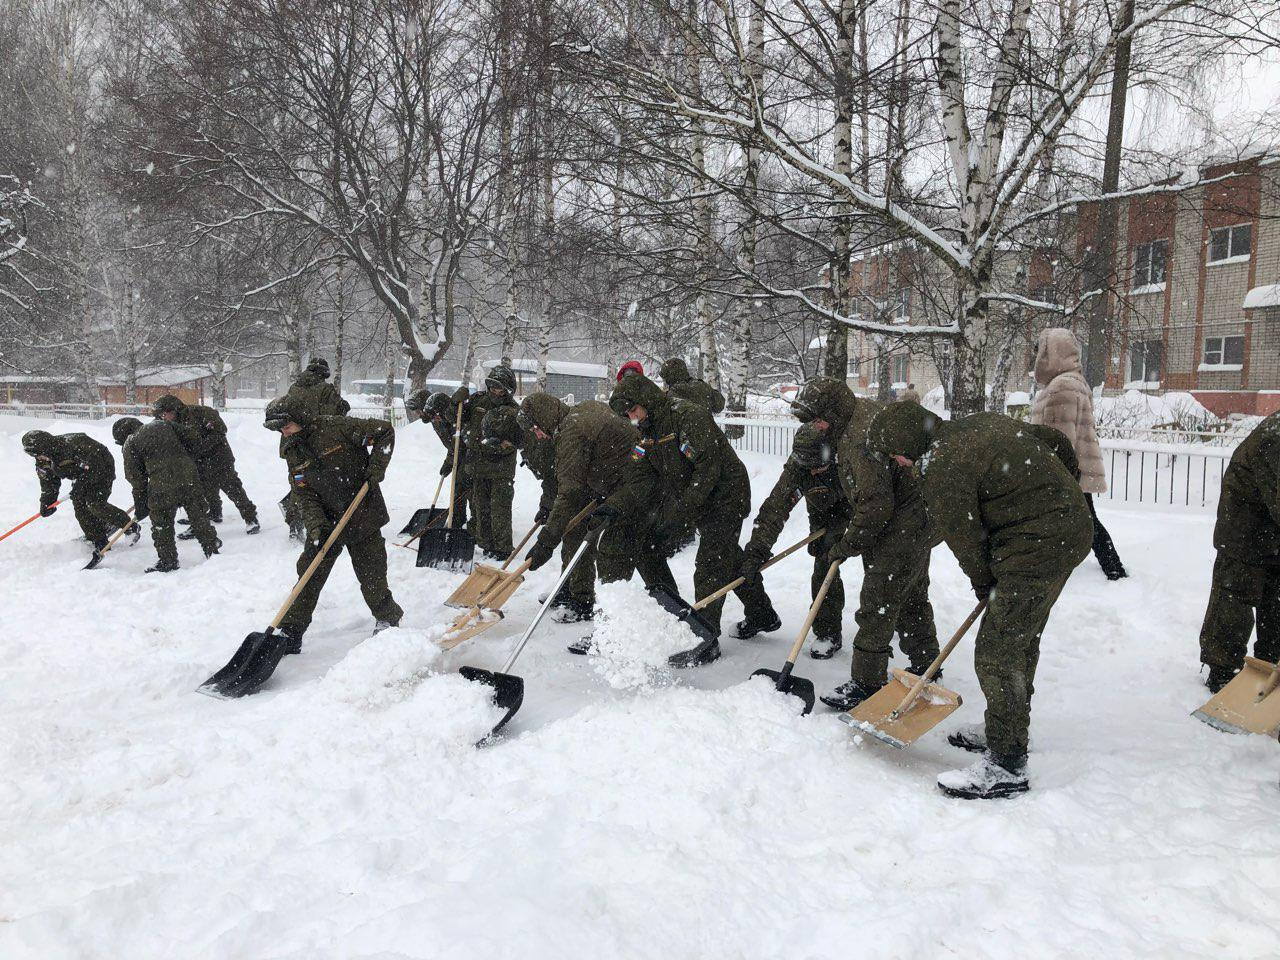 Армейский зим. Солдаты убирают снег. Уборка территории в армии. Солдаты зимой на снегу. Снег в армии.